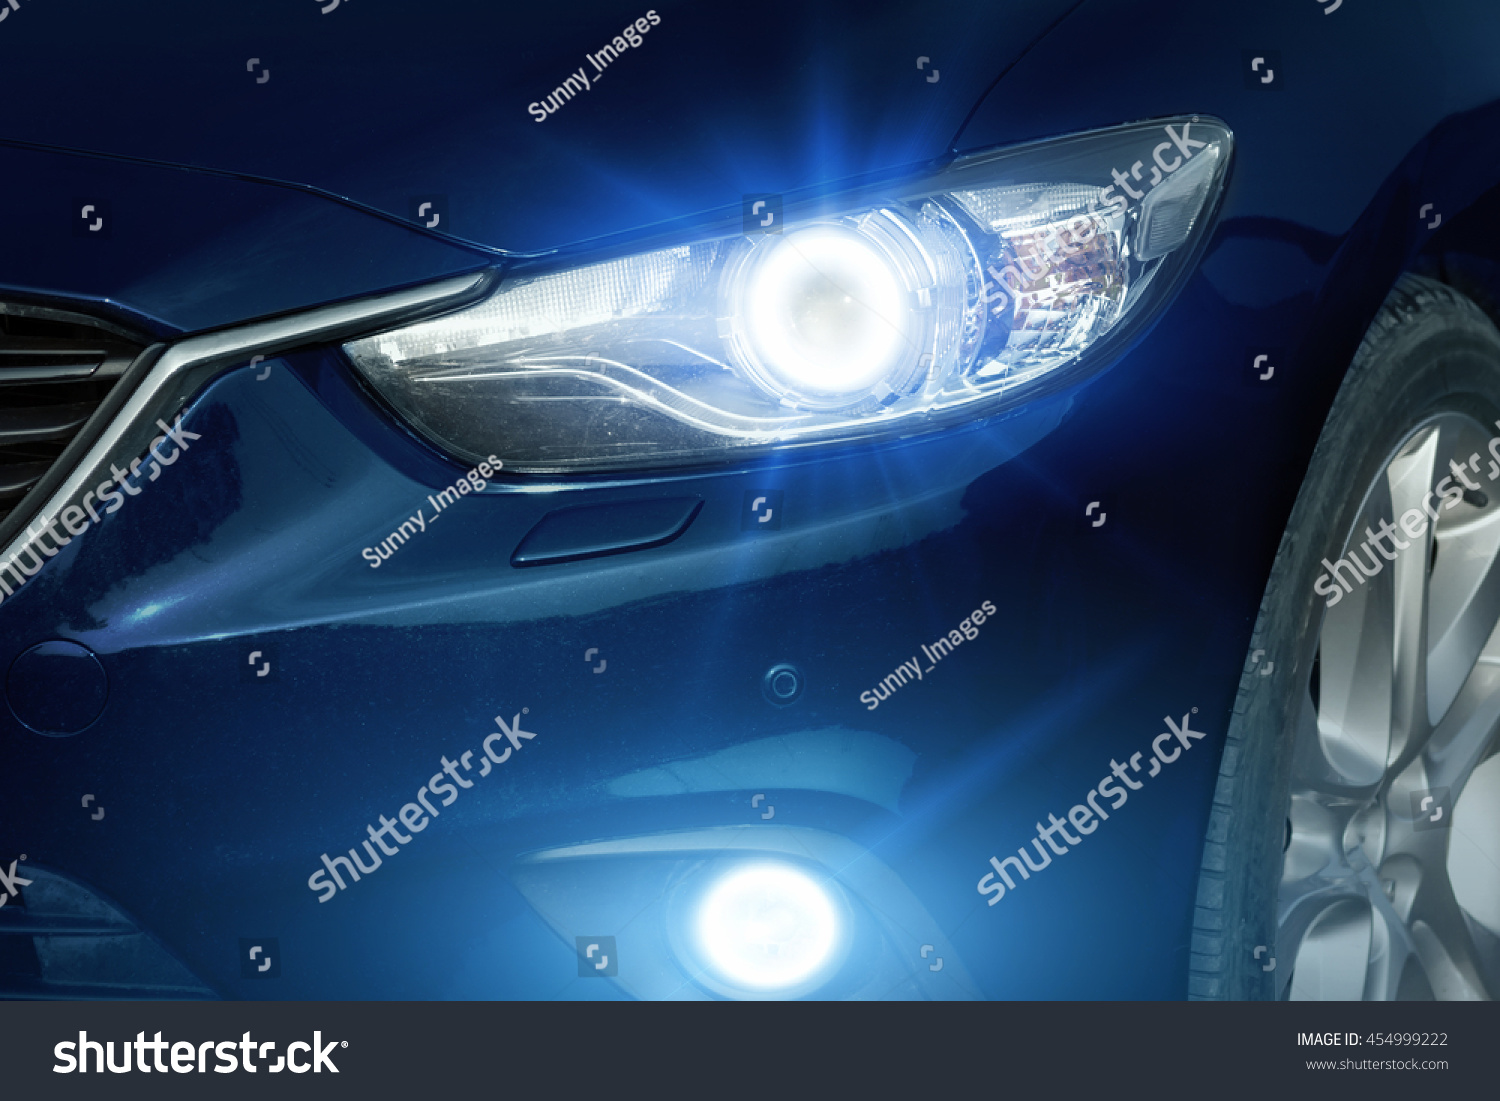 Angel eyes xenon headlight glowing optics lens #454999222